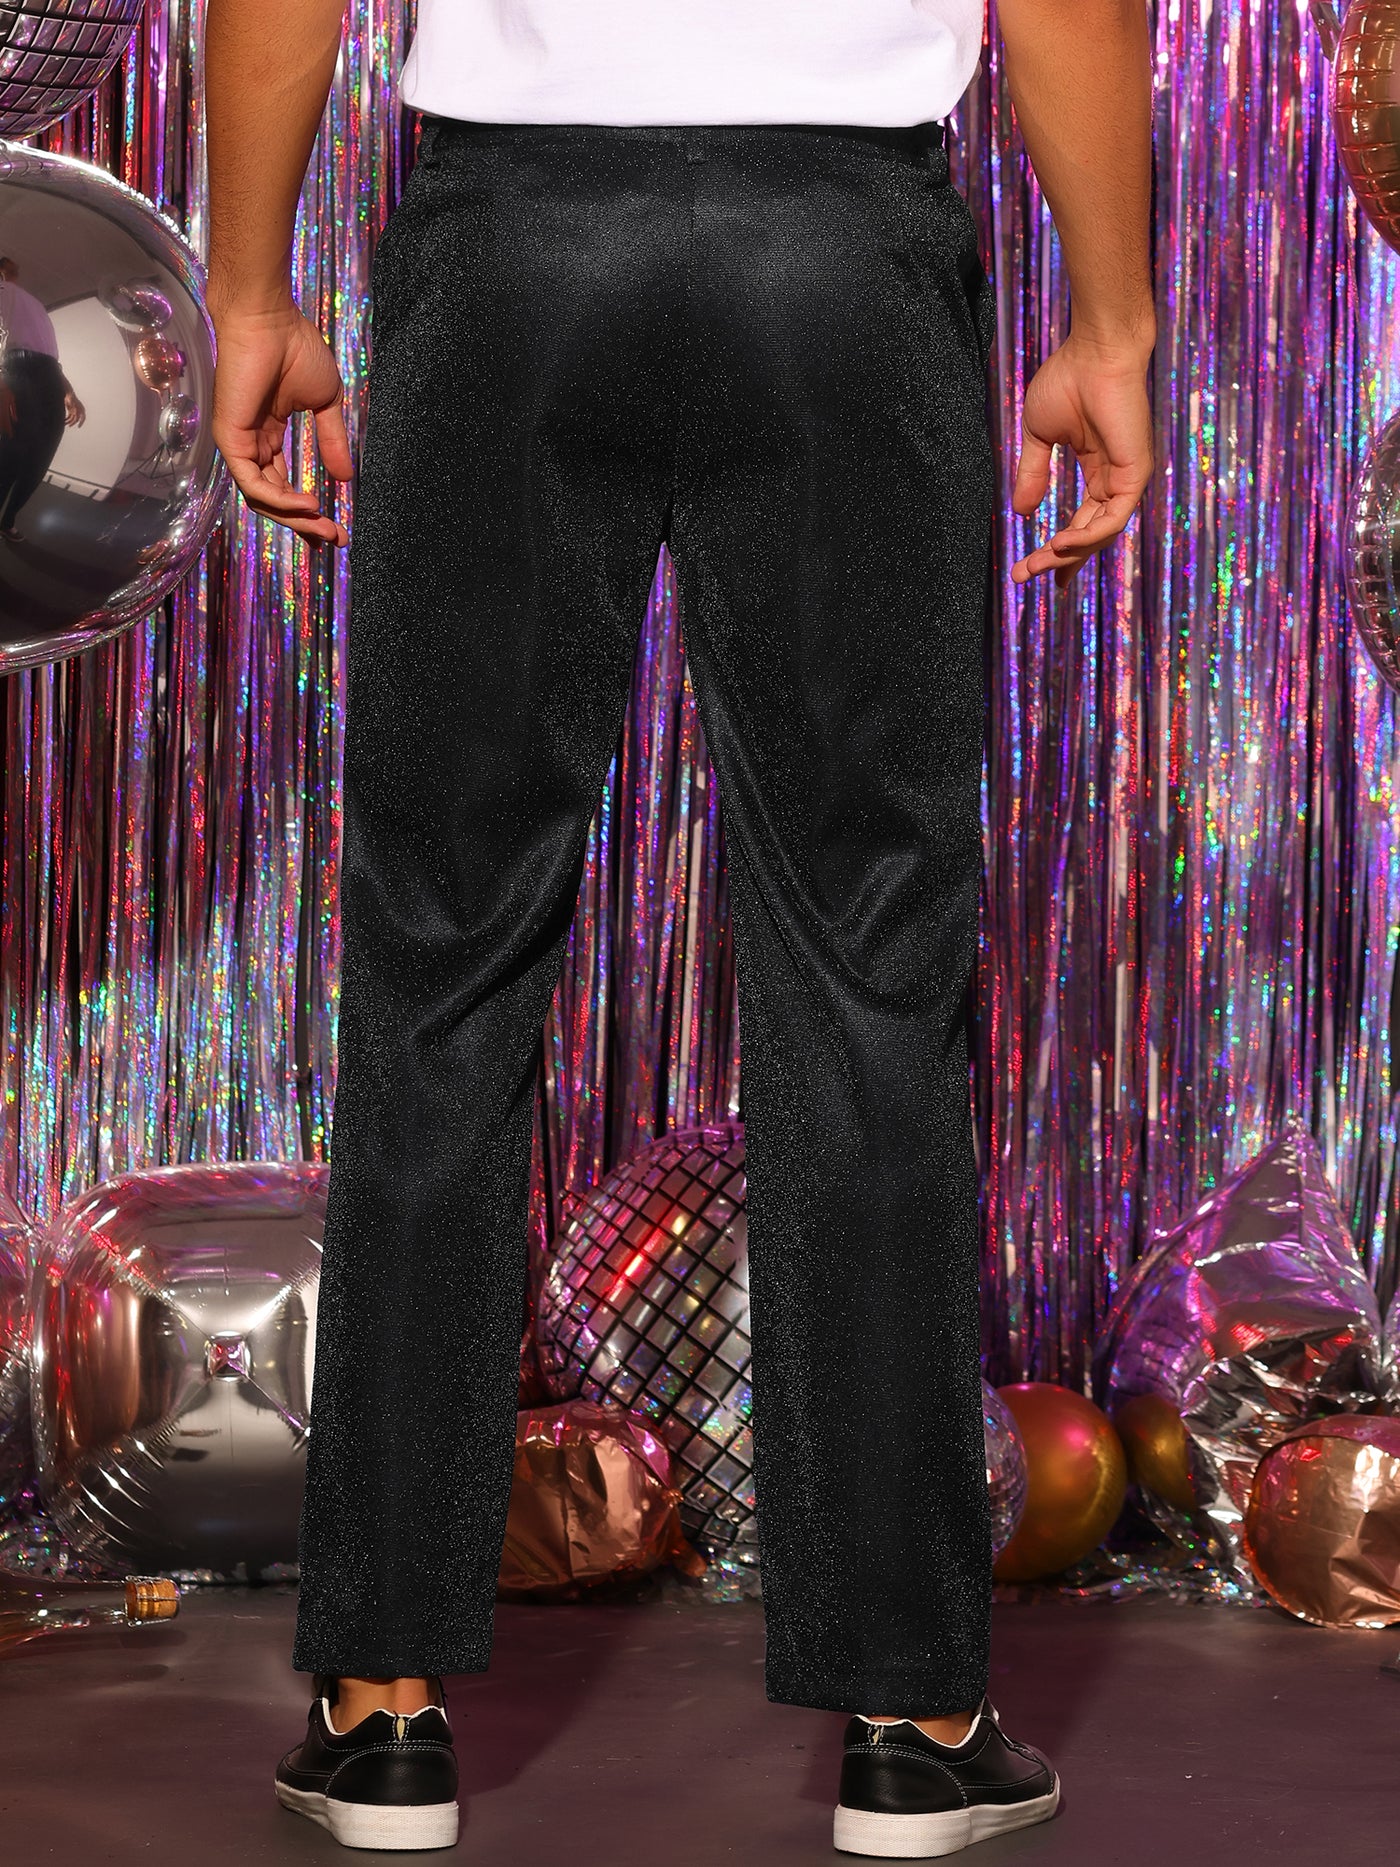 Bublédon Metallic Pants for Men's Straight Leg Party Nightclub Glitter Dress Trouser